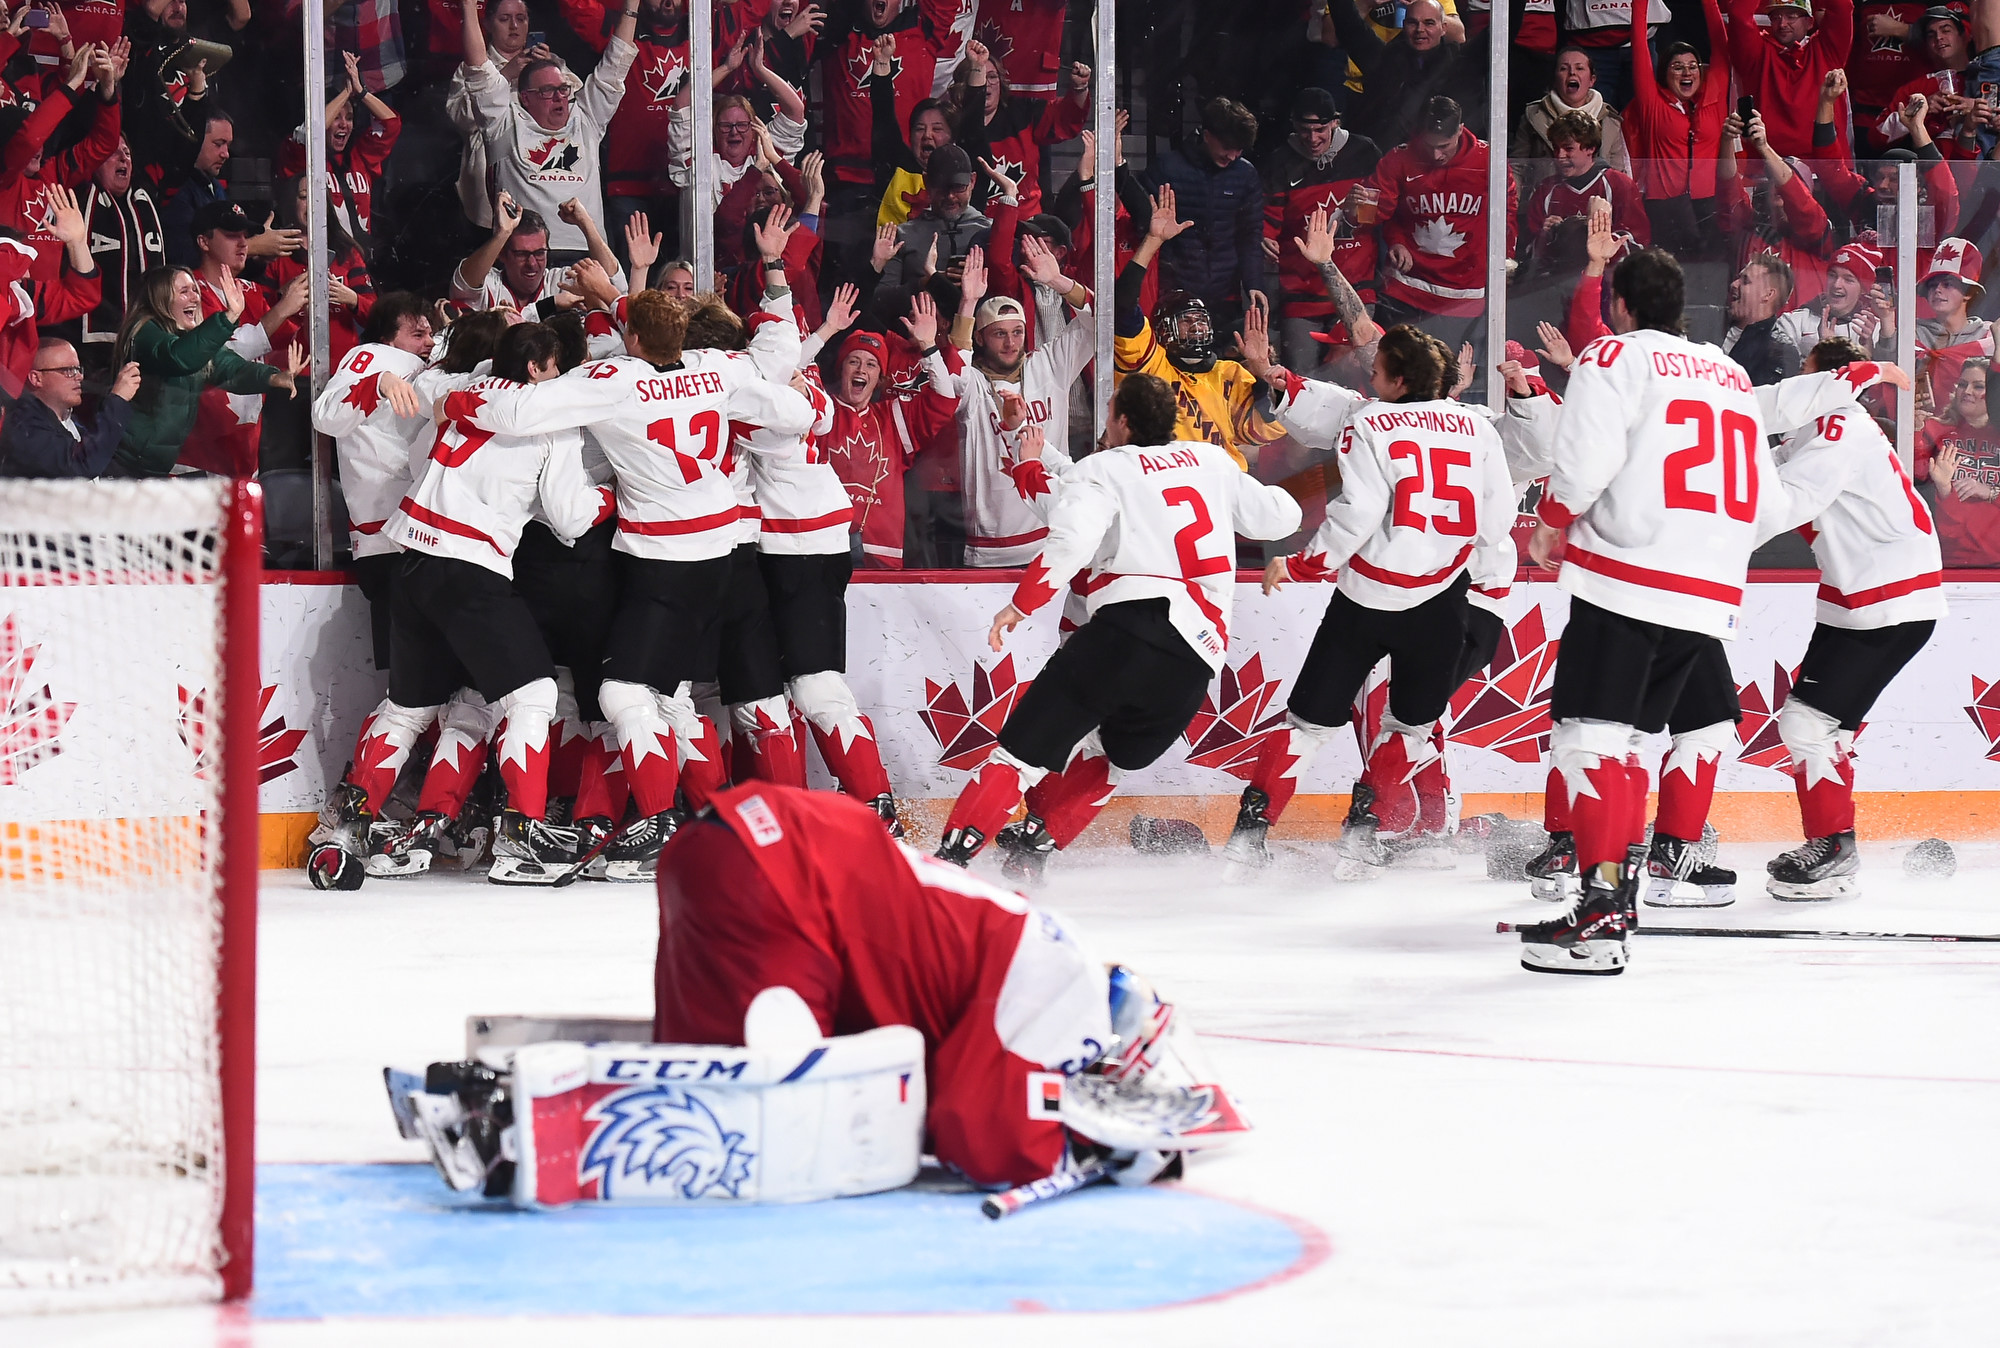 Canada's golden goal